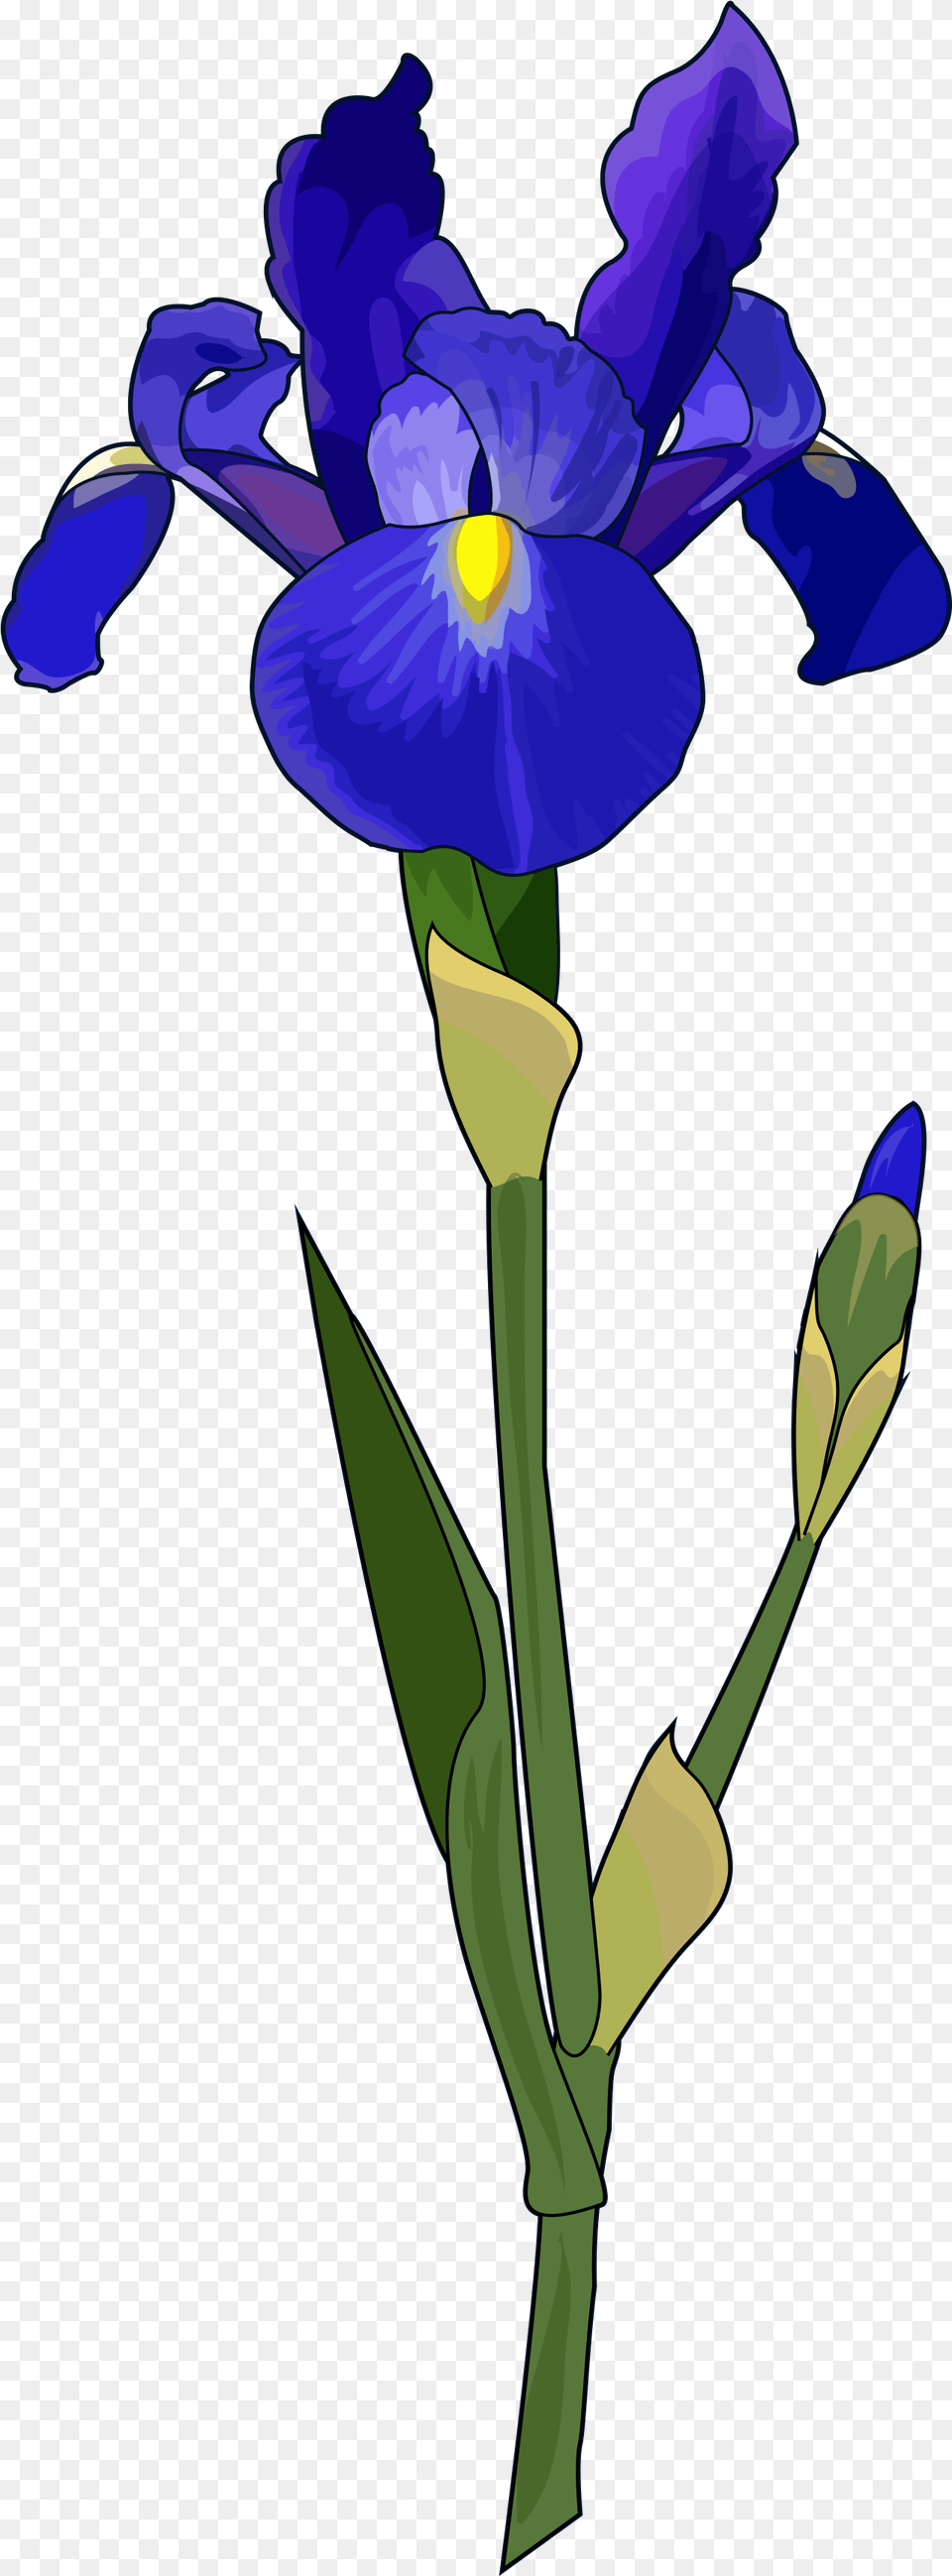 Blue Iris Flower Image Iris Flower, Plant, Purple, Petal Free Transparent Png